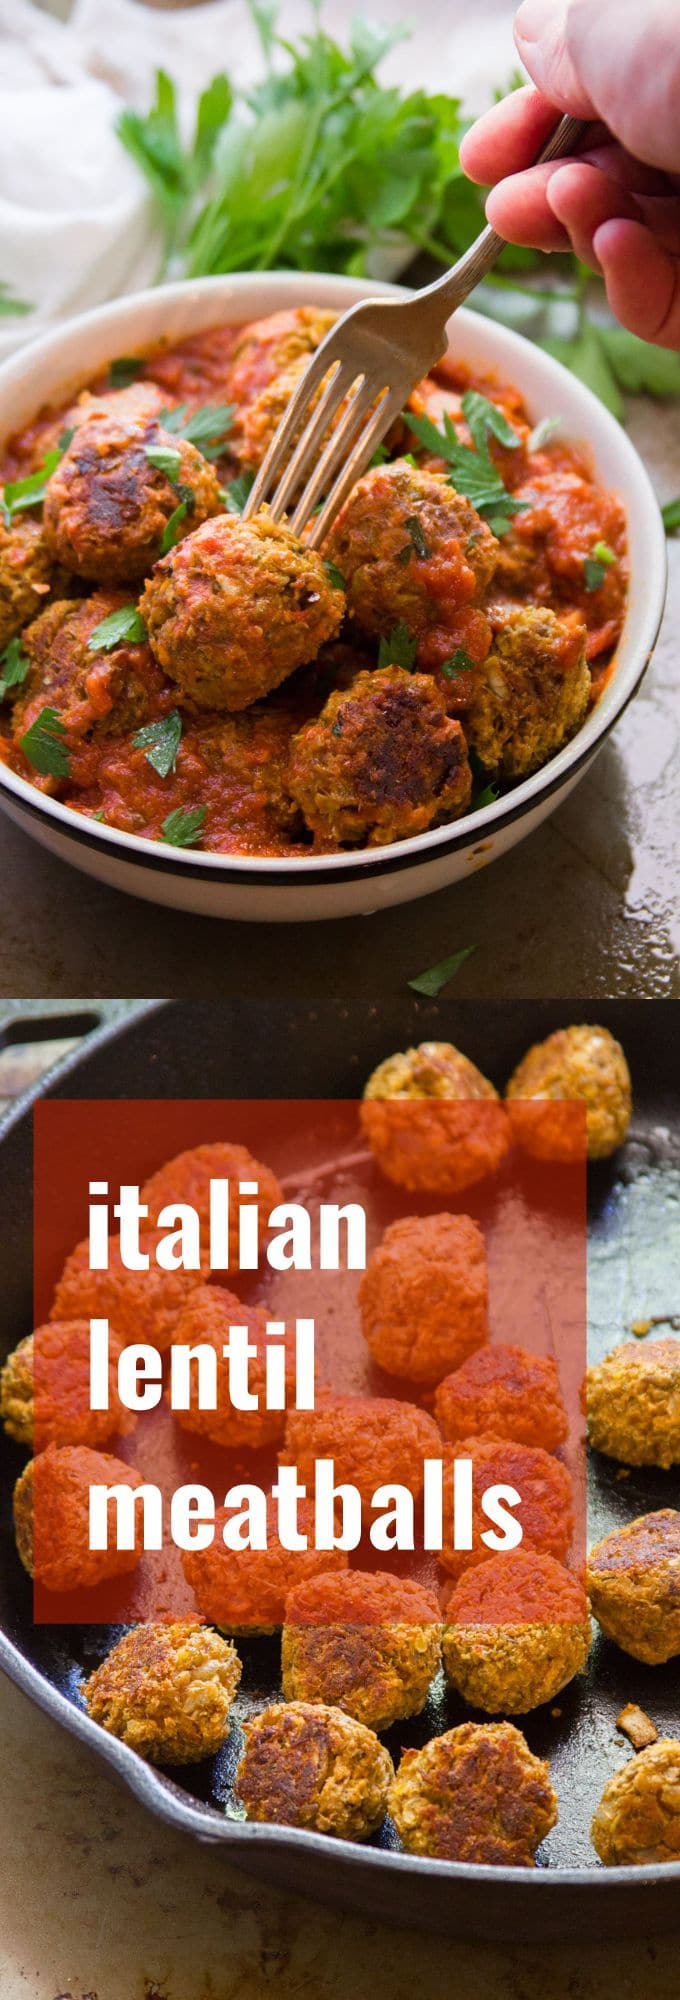 Italian-Style Lentil Meatballs